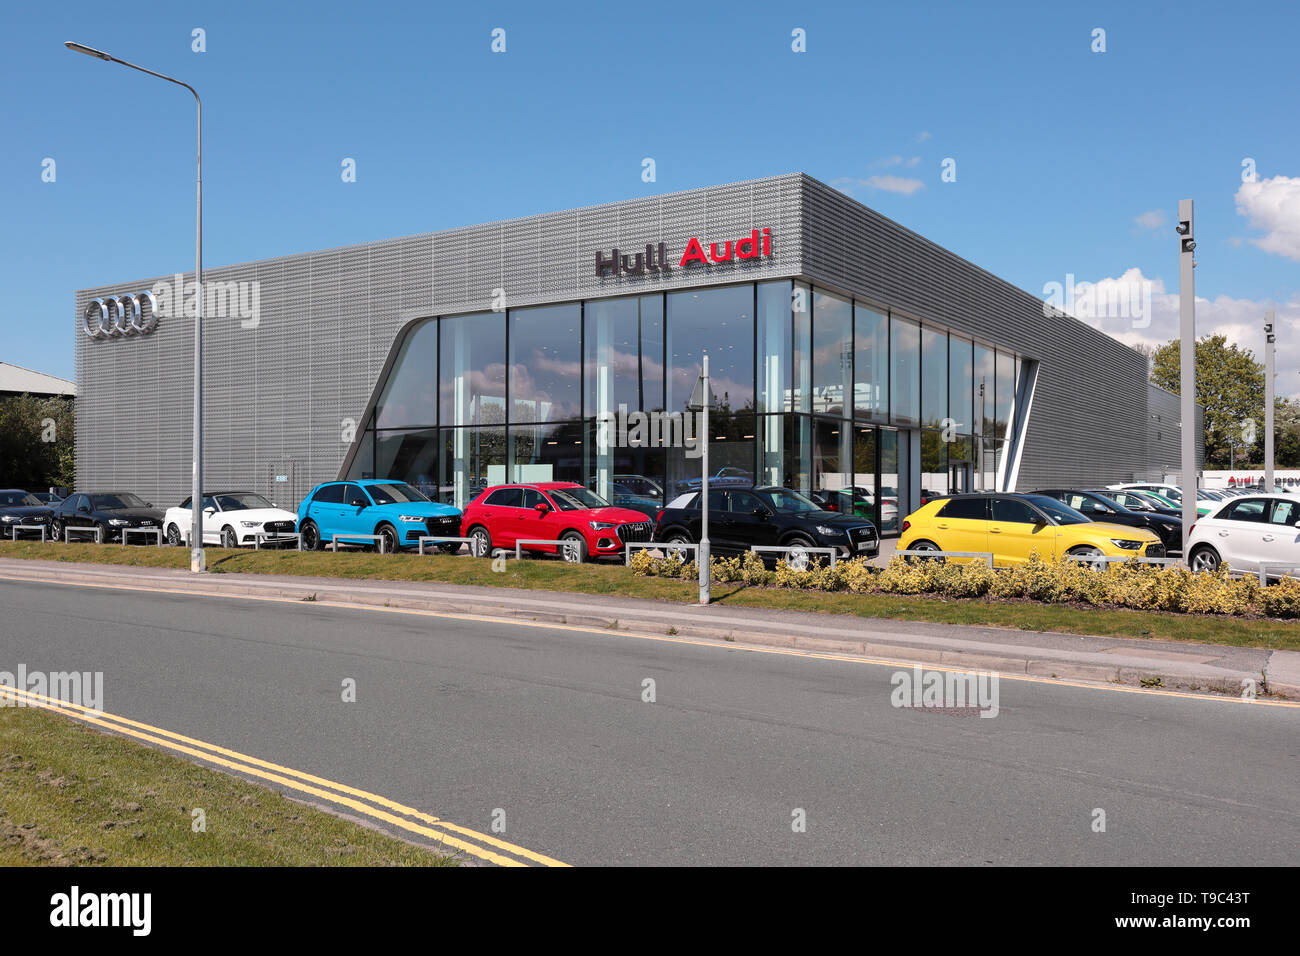 Casco Concesionario Audi showroom contra un cielo azul claro Foto de stock